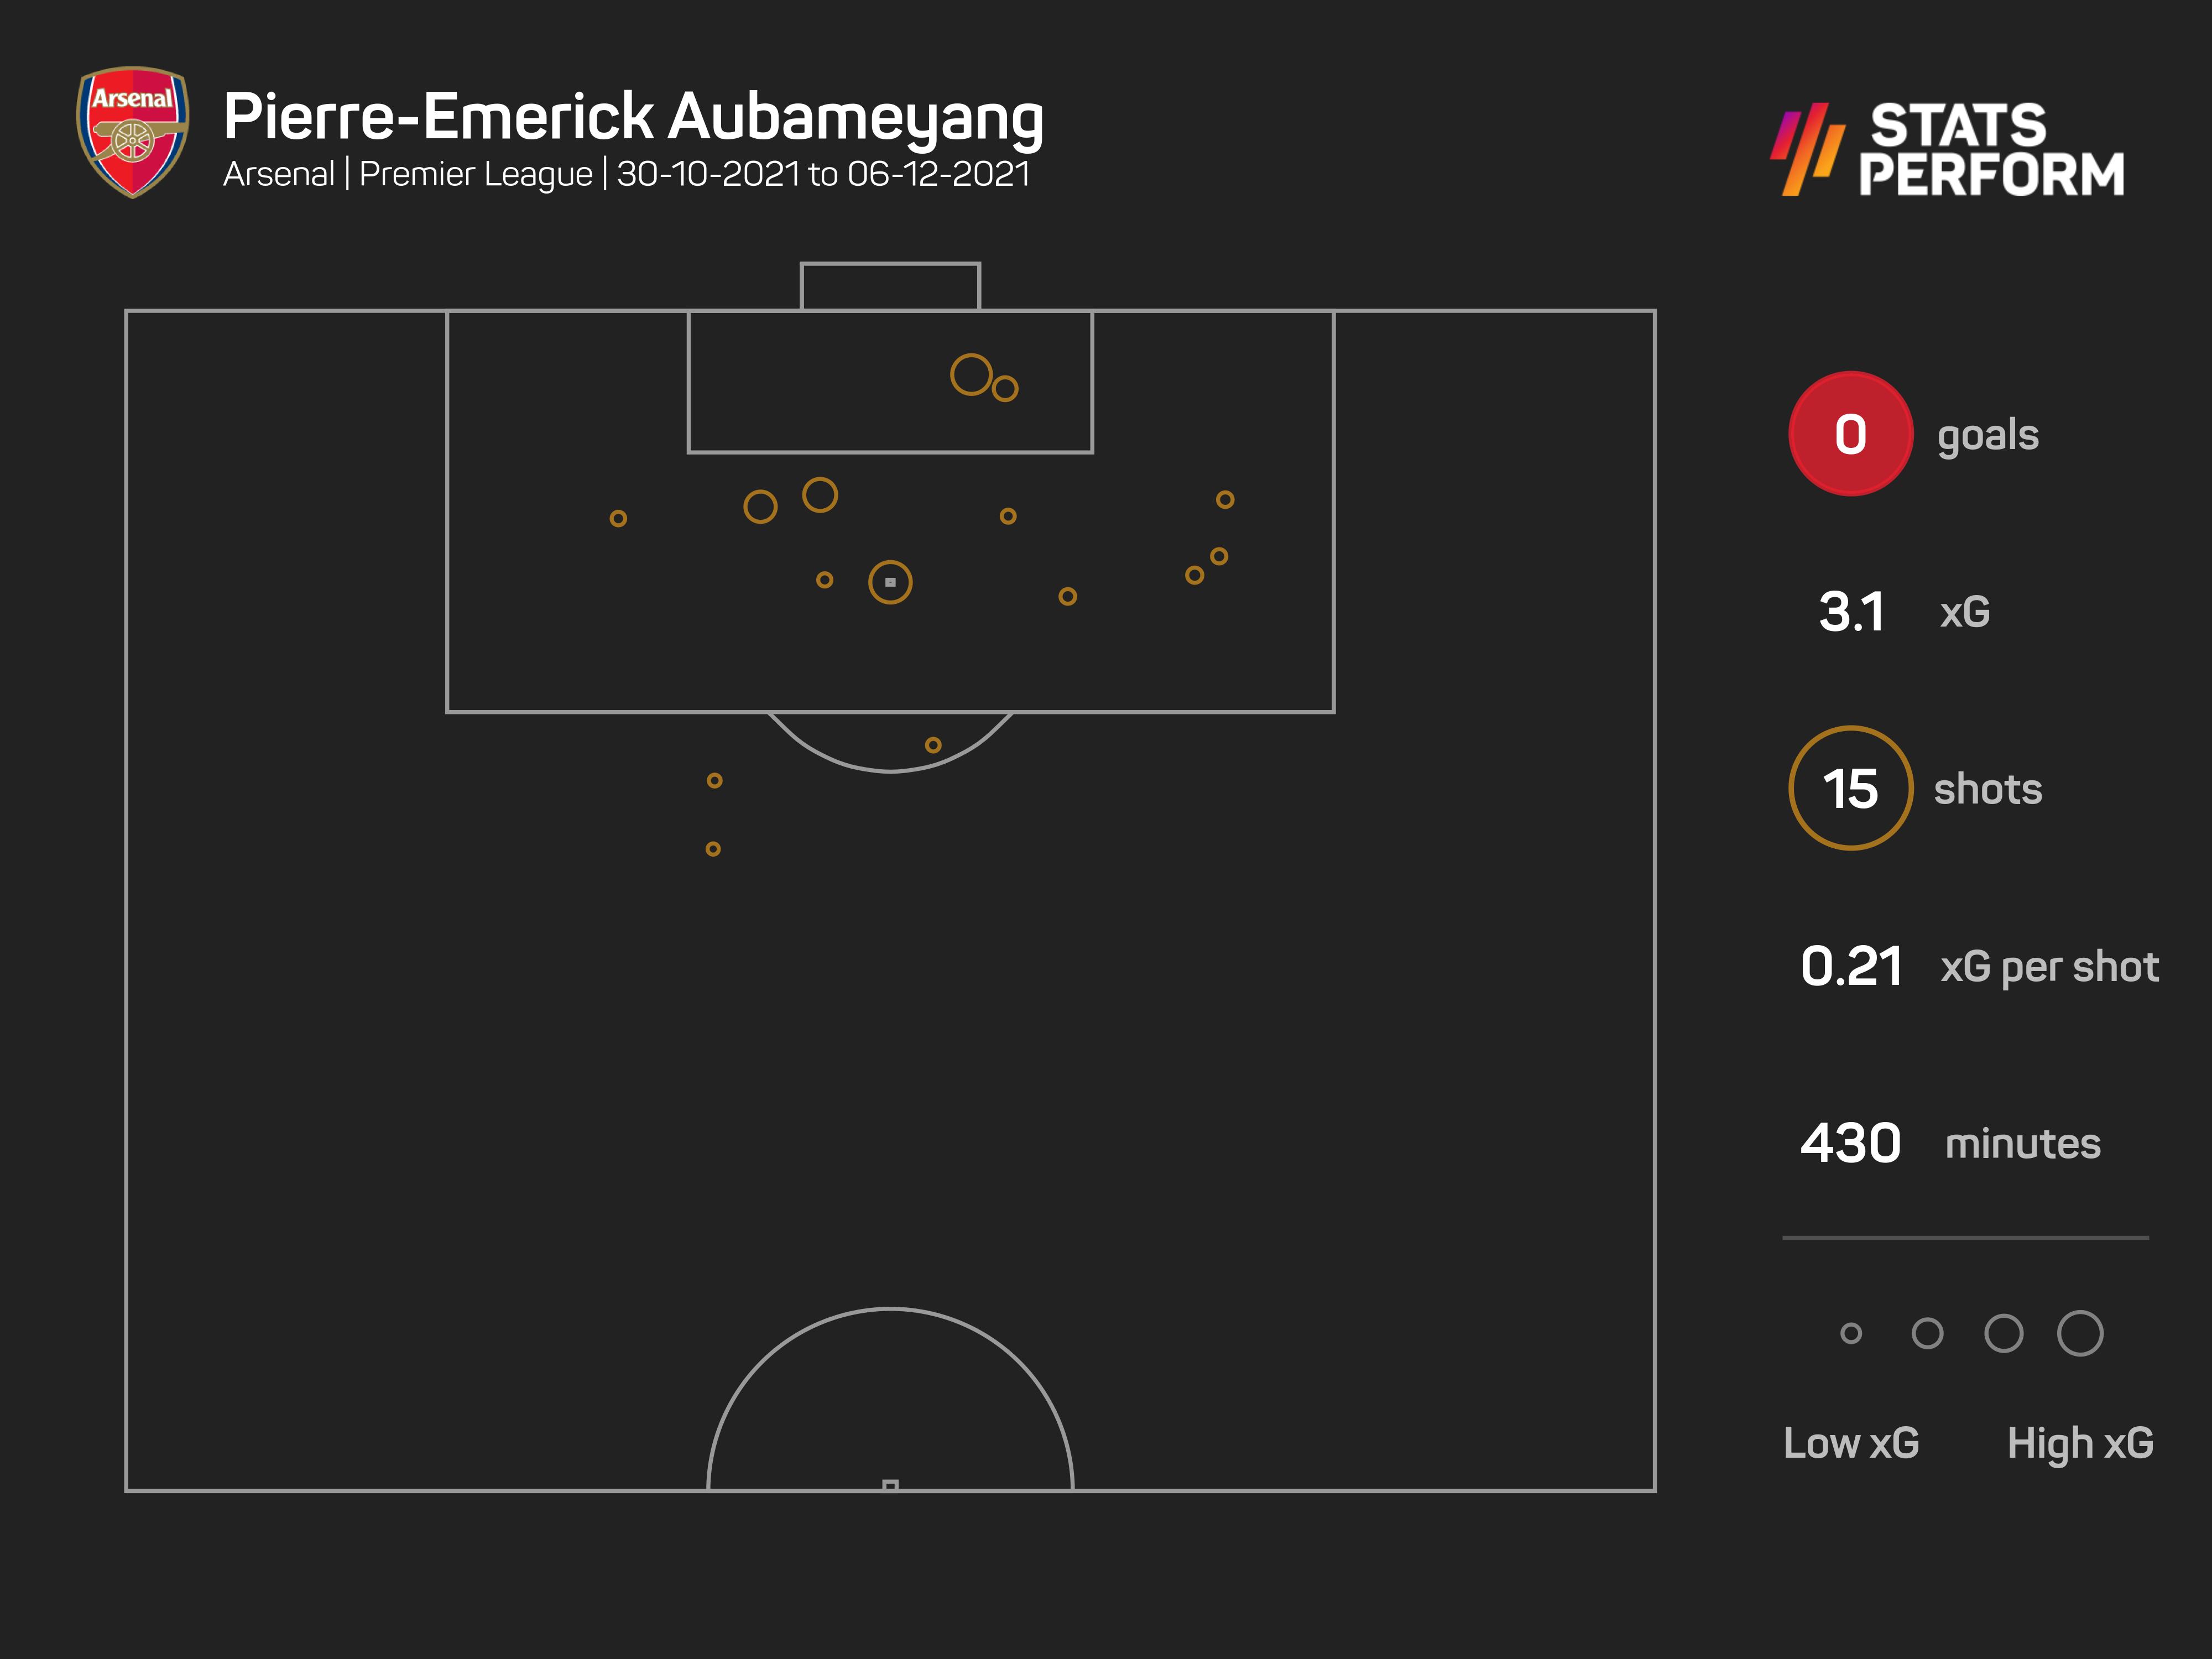 Pierre-Emerick Aubameyang's last six games for Arsenal